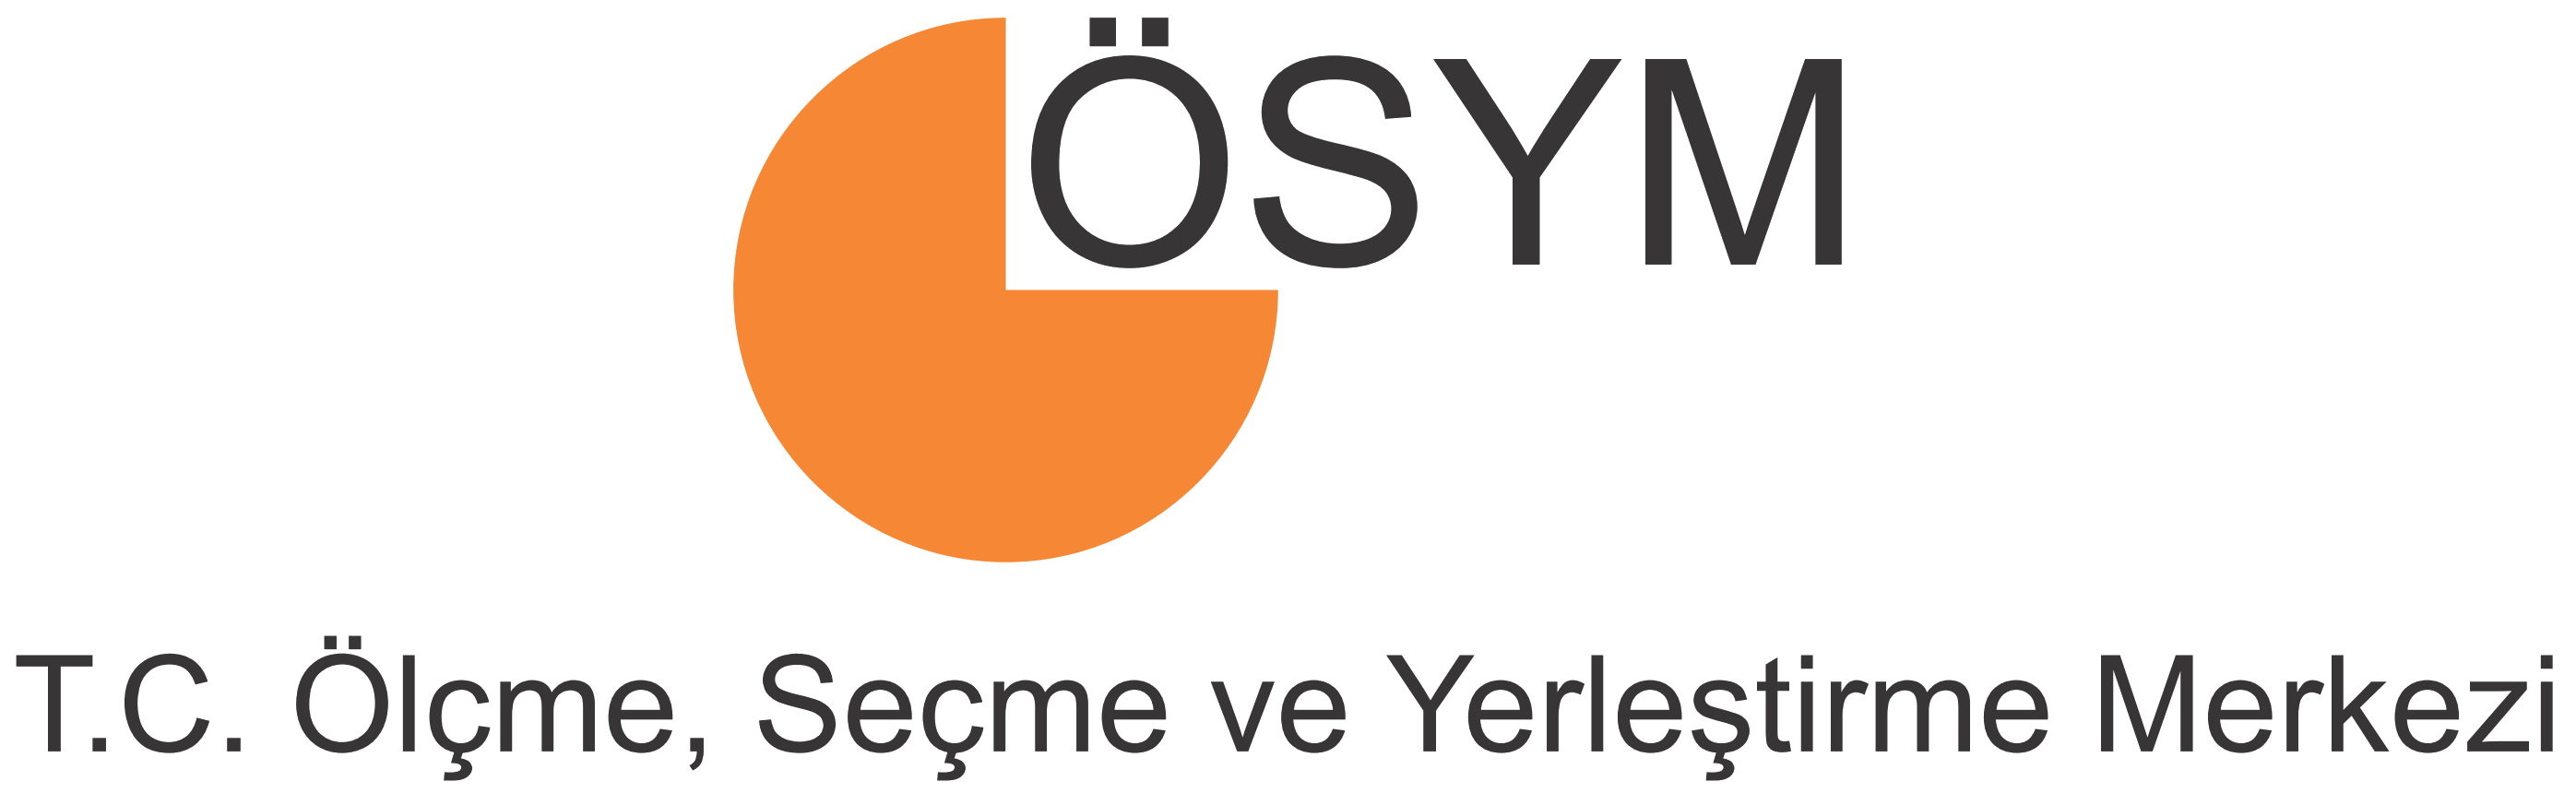 ÖSYM Logo [osym.gov.tr] png